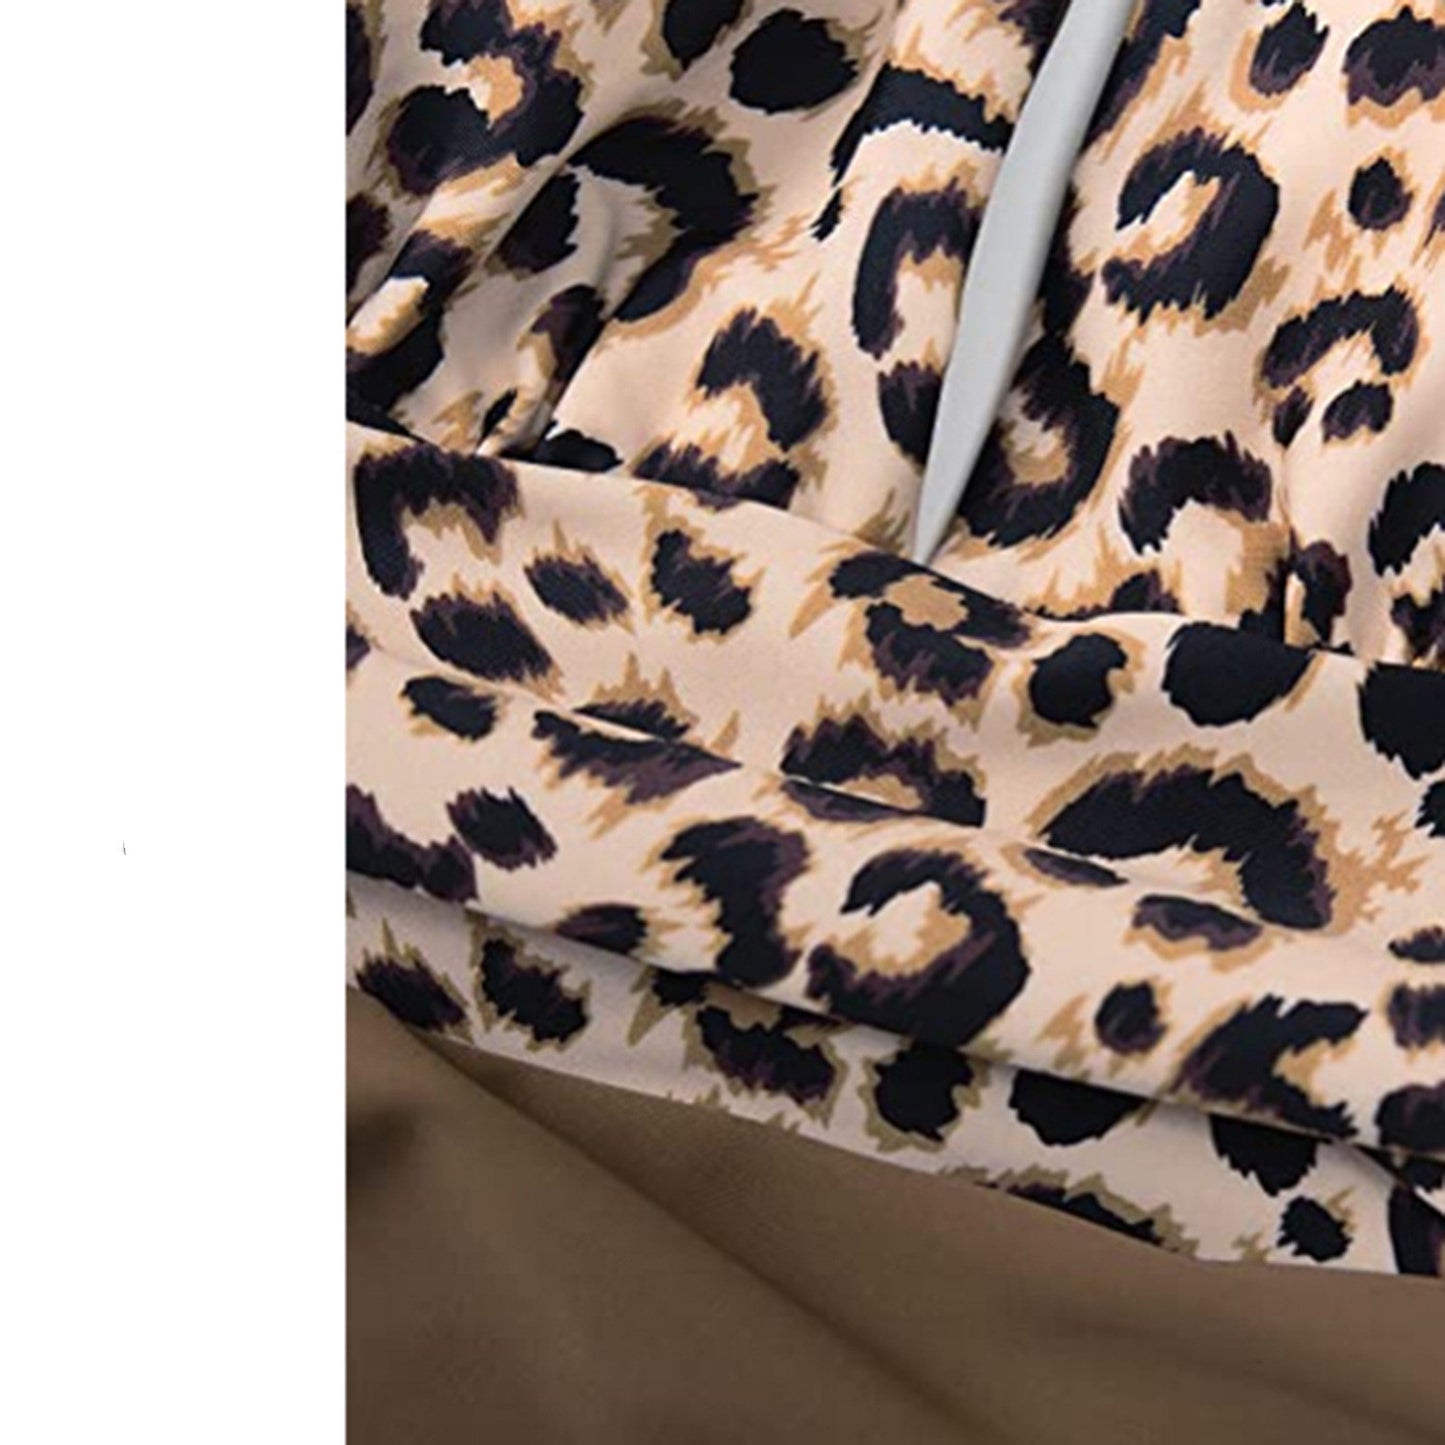 Halter Backless Bikini Waist Print Leopard Print Color Block One-piece Swimsuit For Women